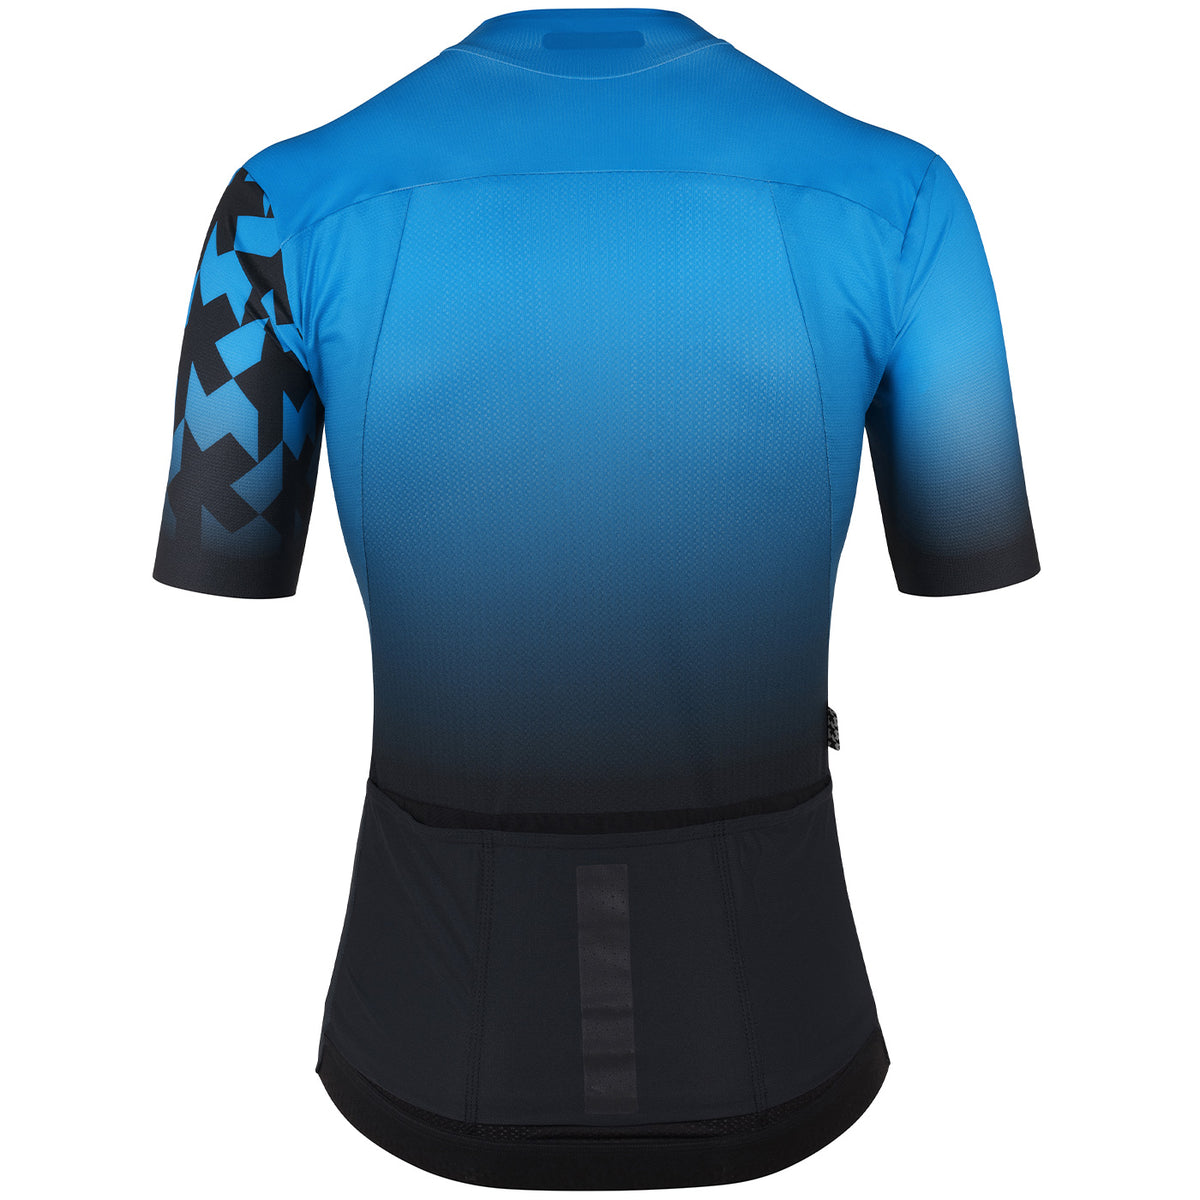 Assos Equipe RS S9 Targa jersey - Blue – All4cycling